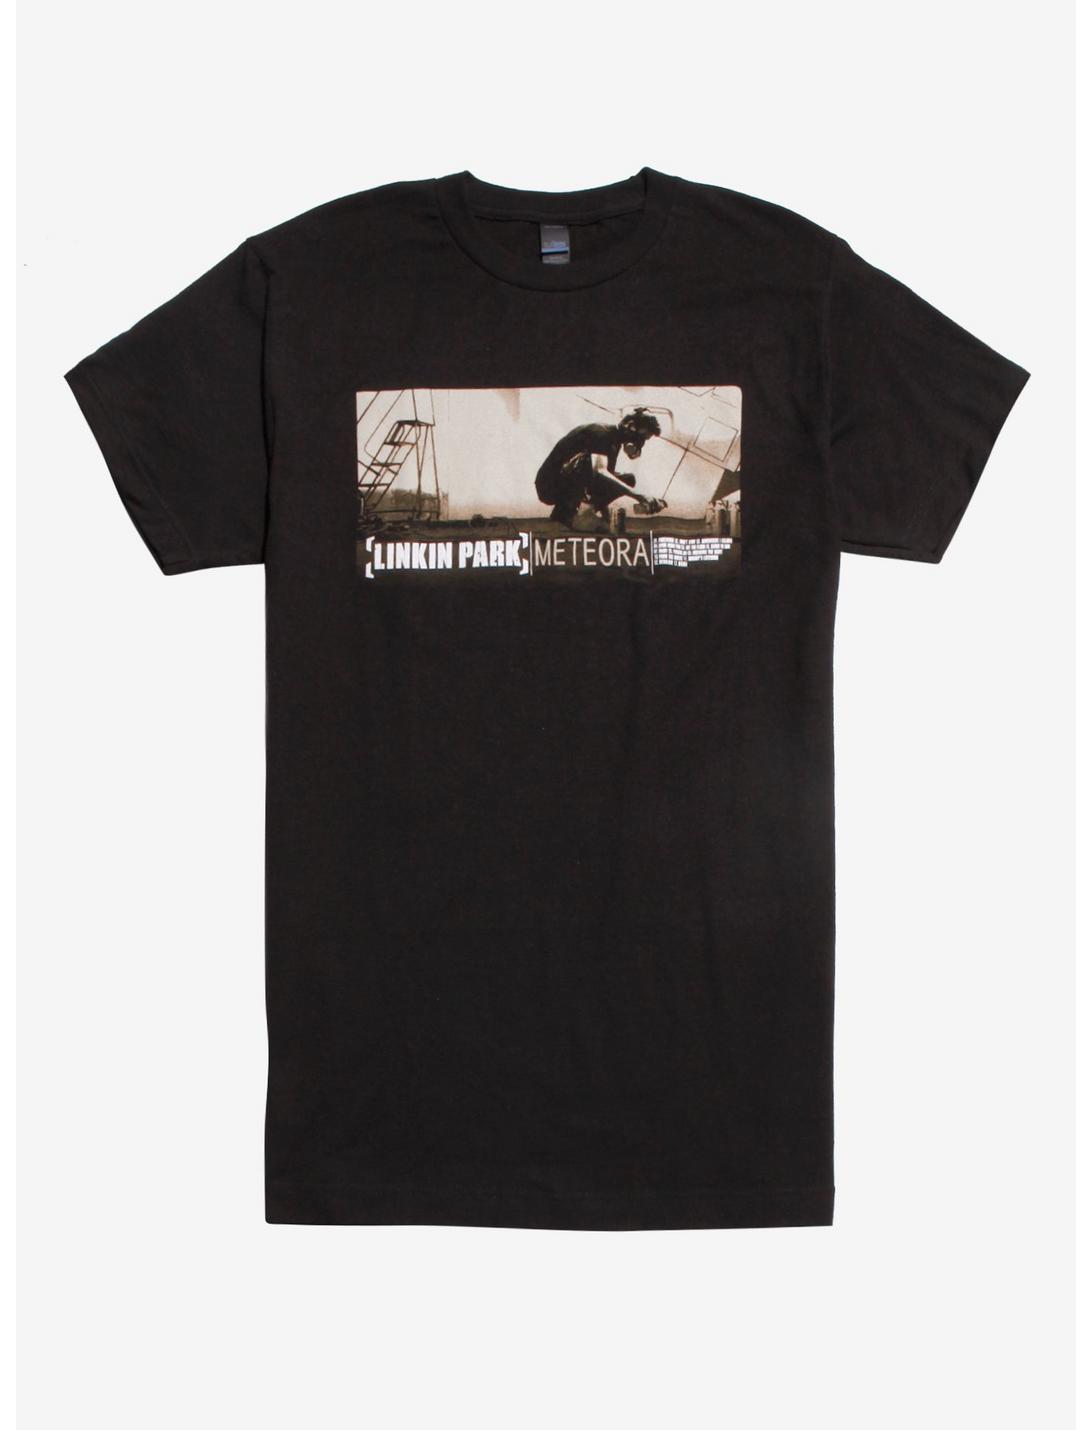 Linkin Park Meteora T-Shirt, BLACK, hi-res